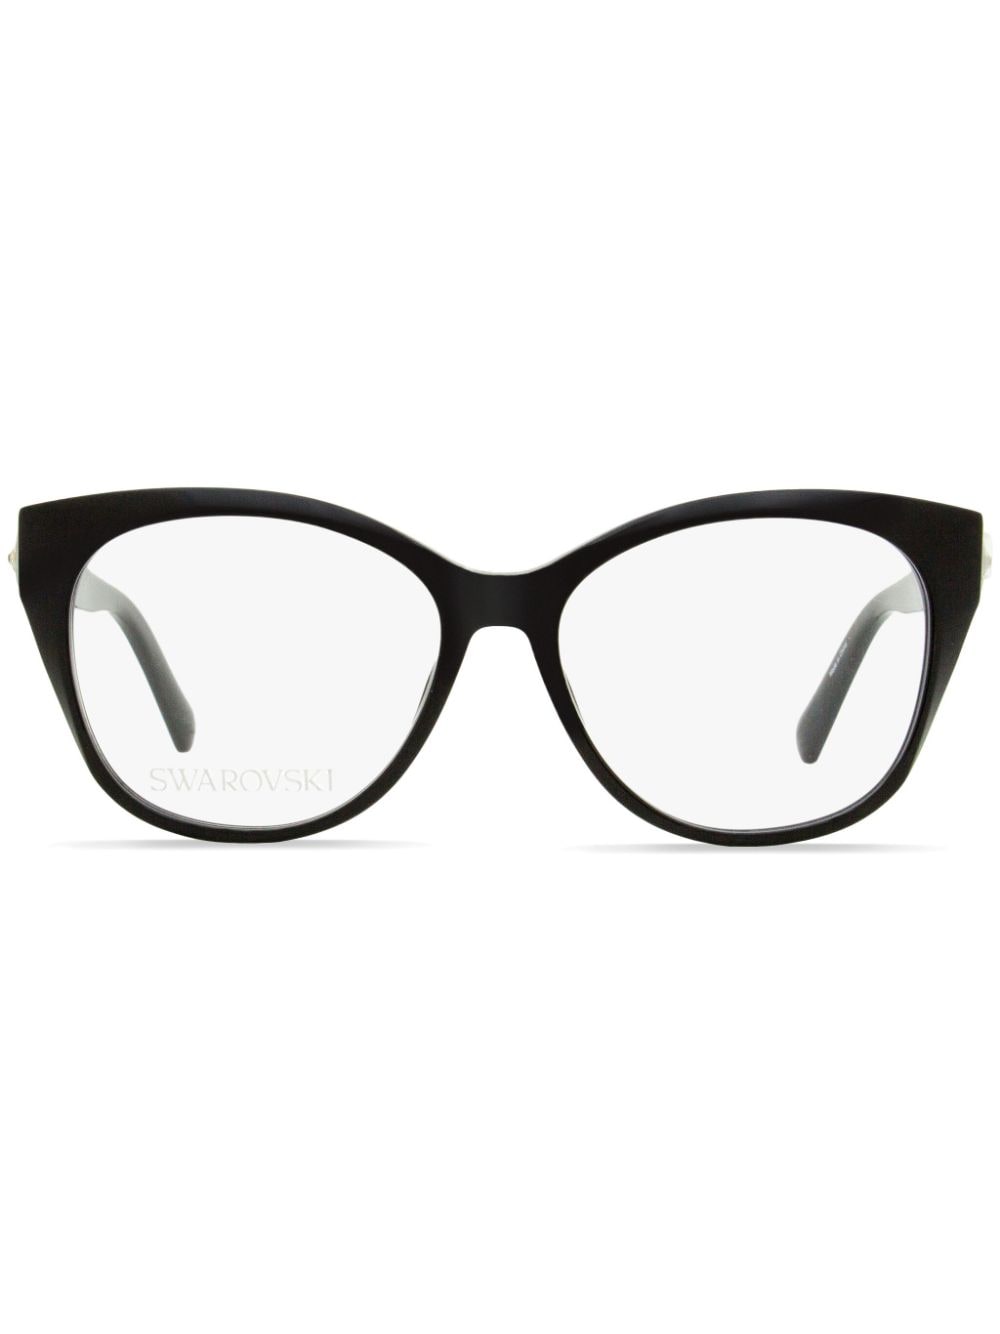 Swarovski 5469 oval-frame crystal glasses - Black von Swarovski